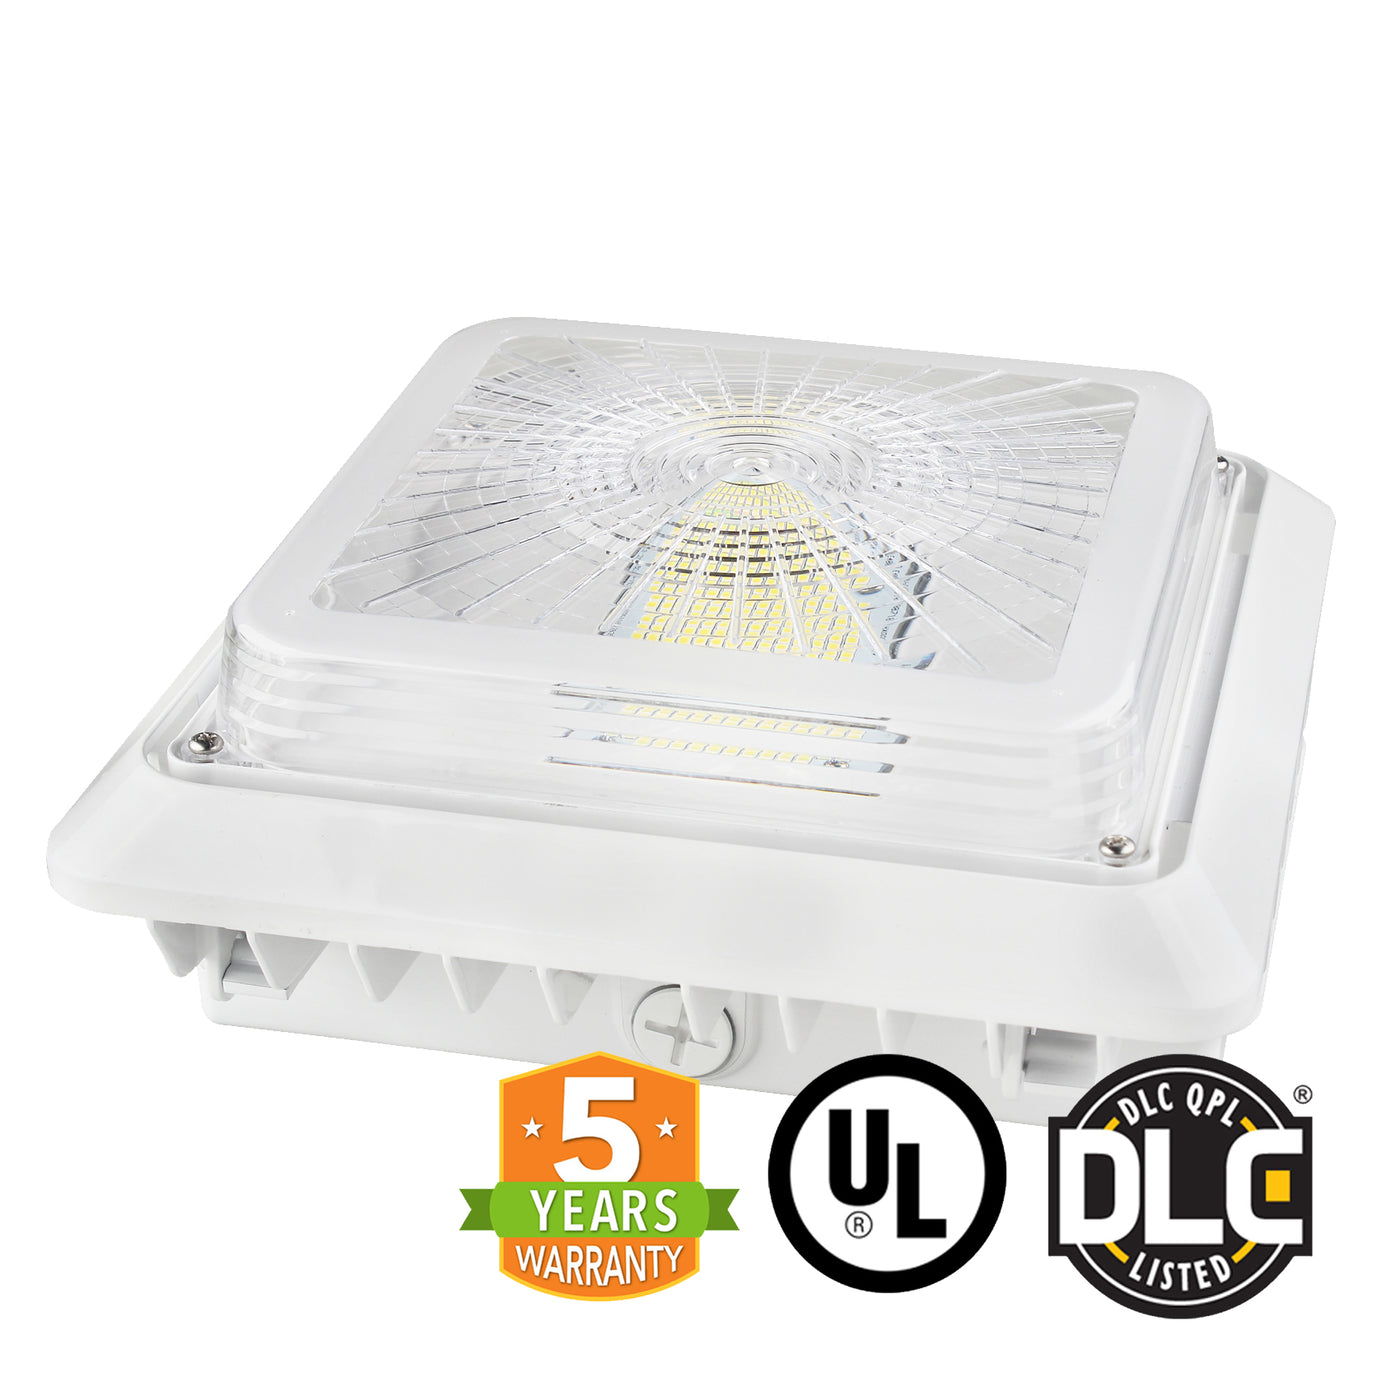 LED Canopy Light - 55W Outdoor Parking Garage Light - (UL+DLC Listed)